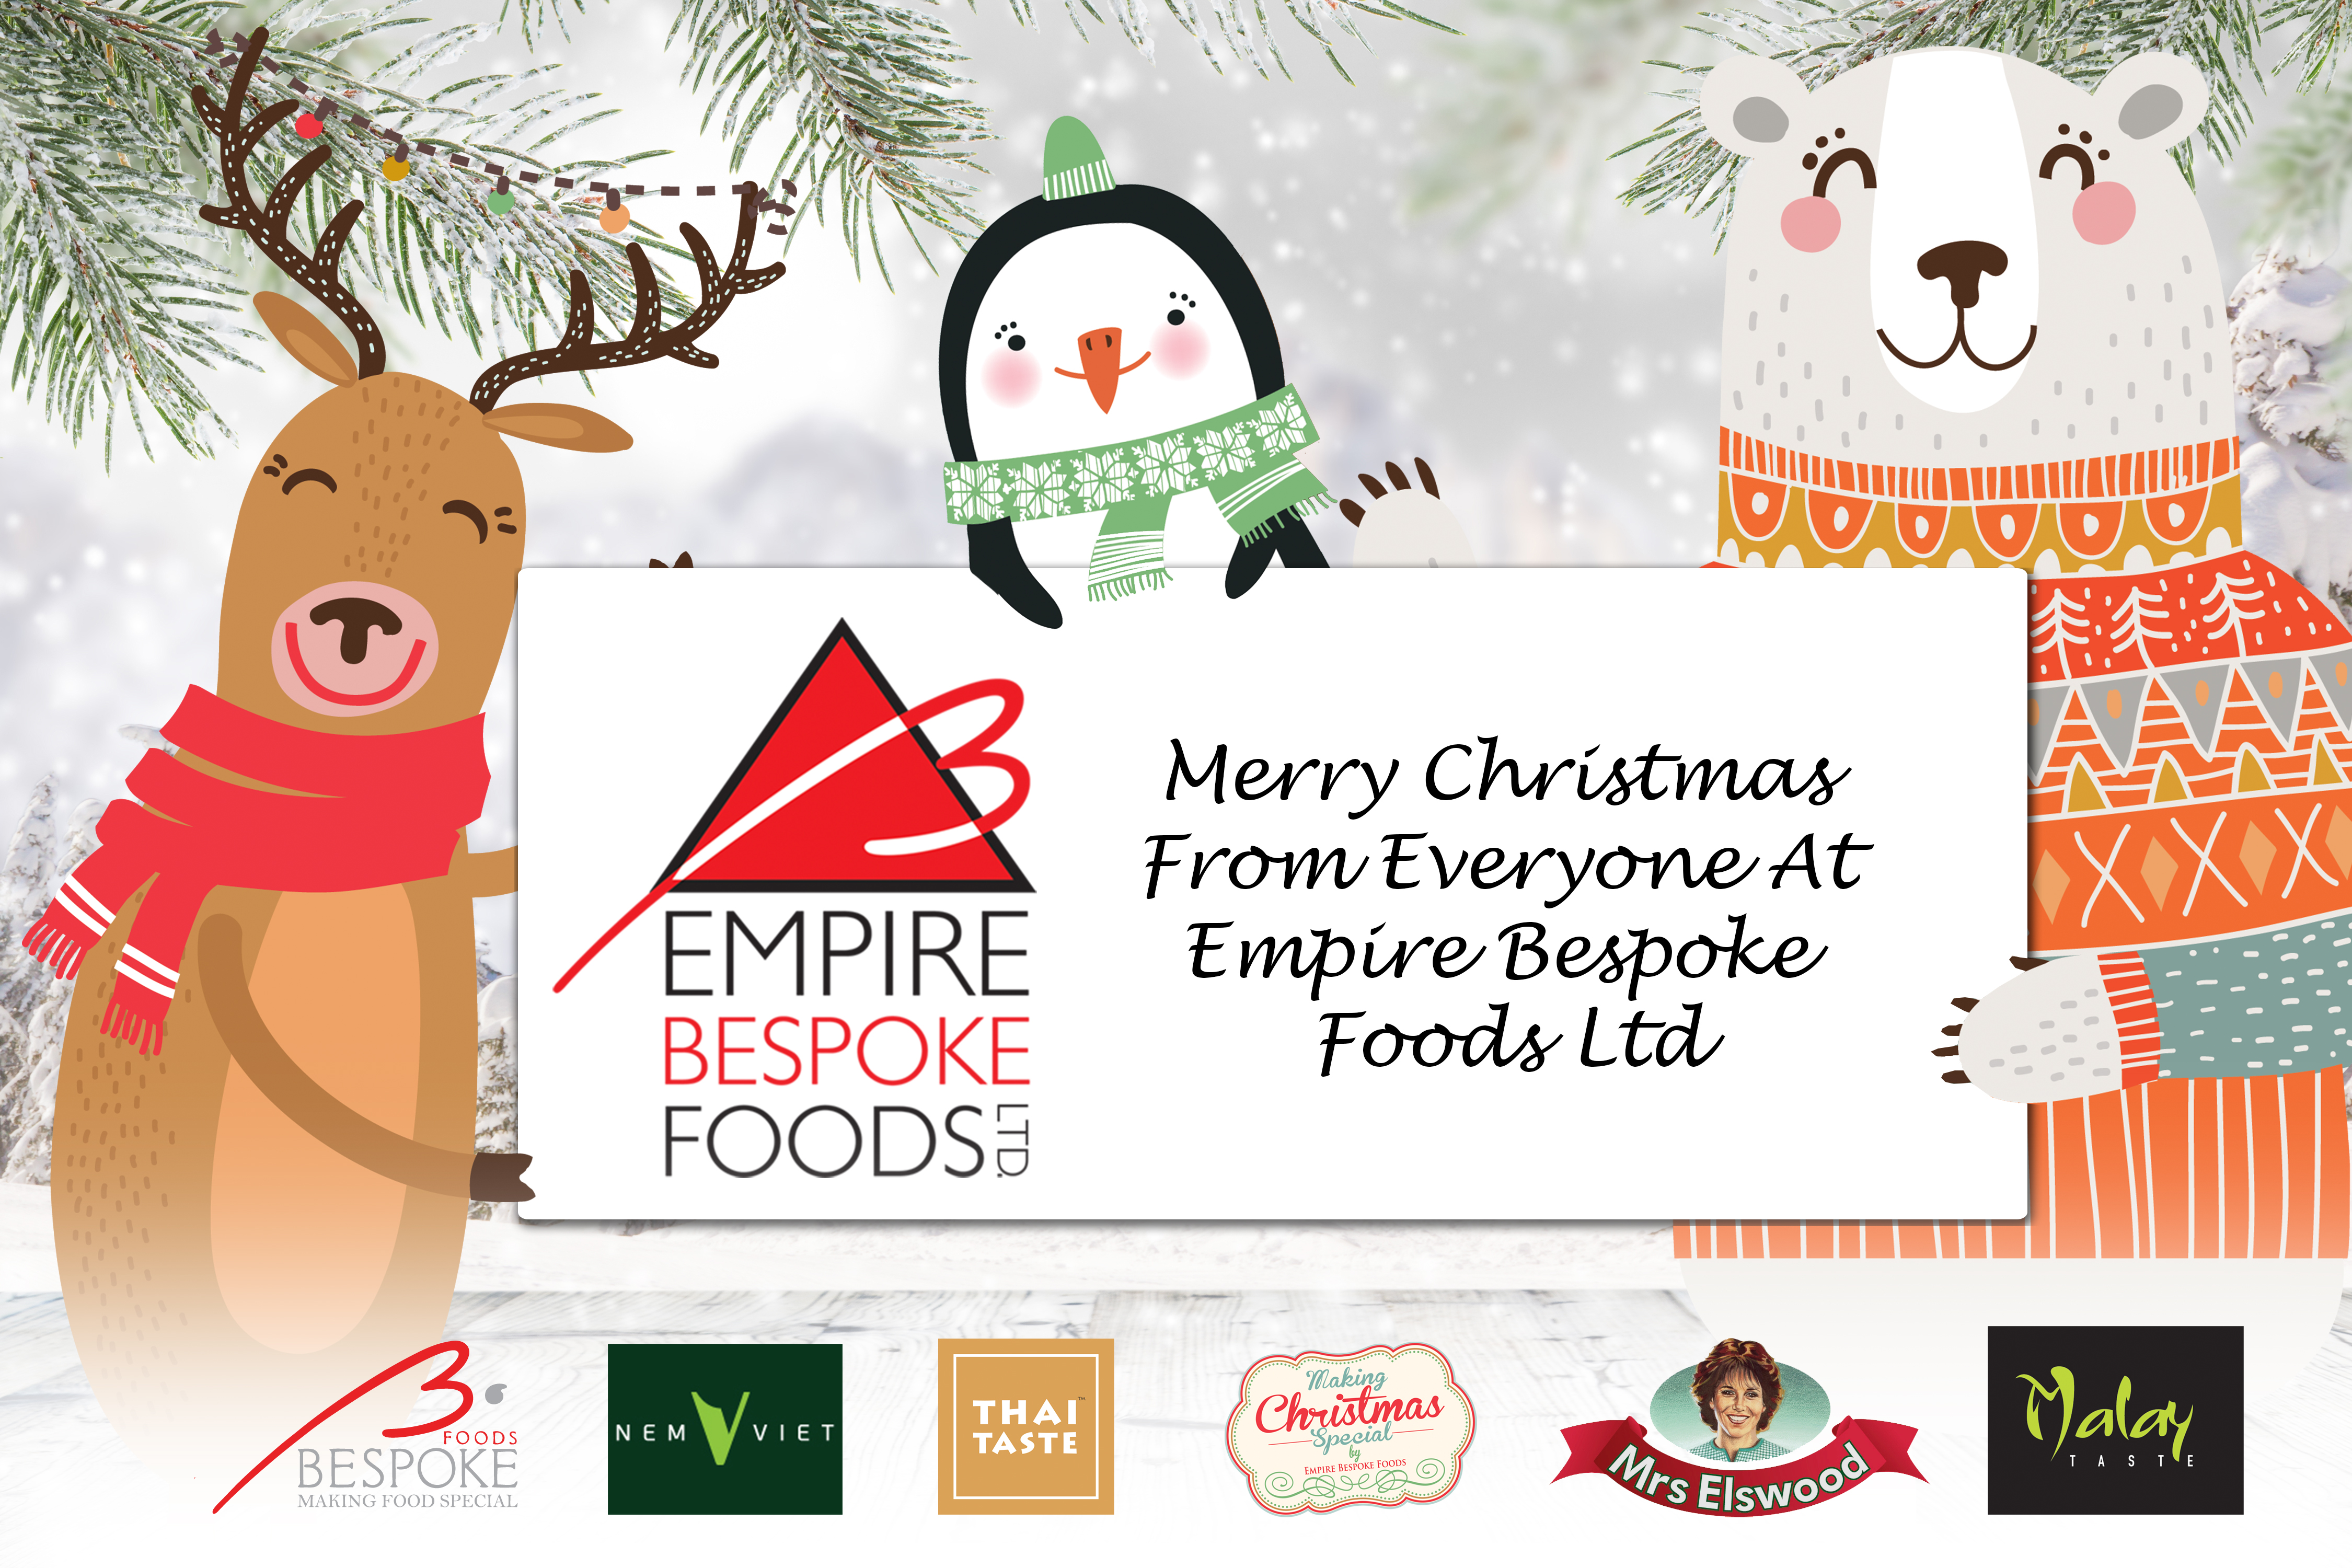 Merry Christmas Empire Bespoke Foods Ltd Importer Distributor